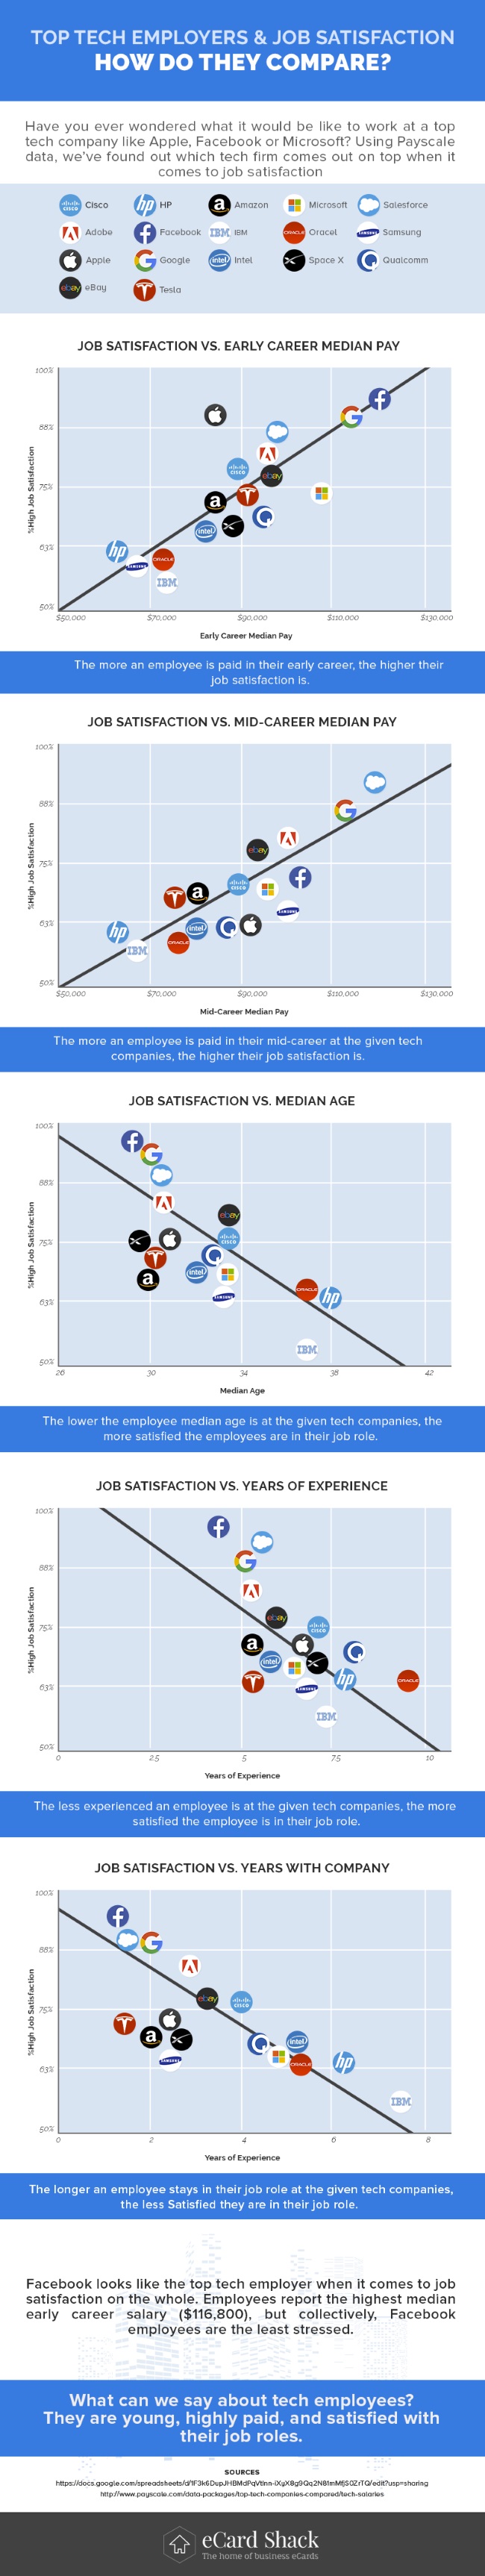 tech job satisfaction